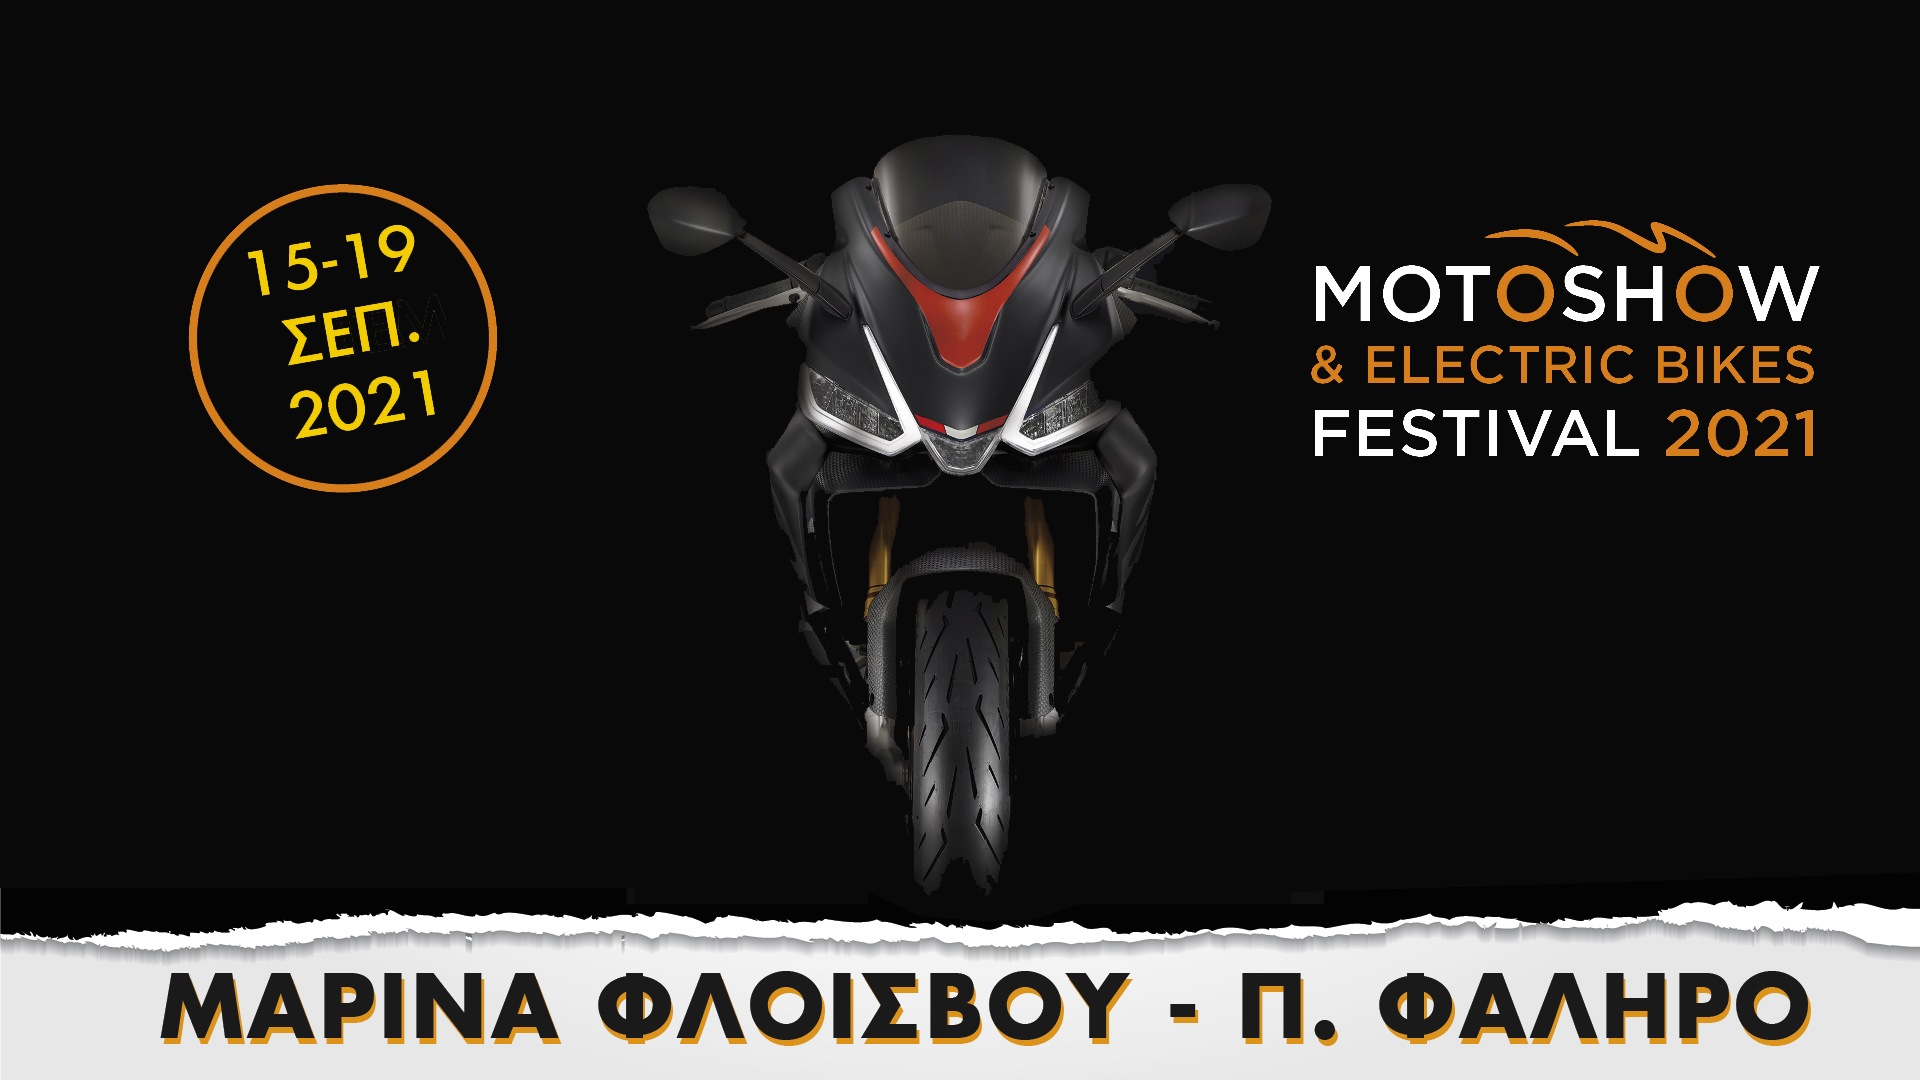 Motoshow & Electric Bikes Festival 2021